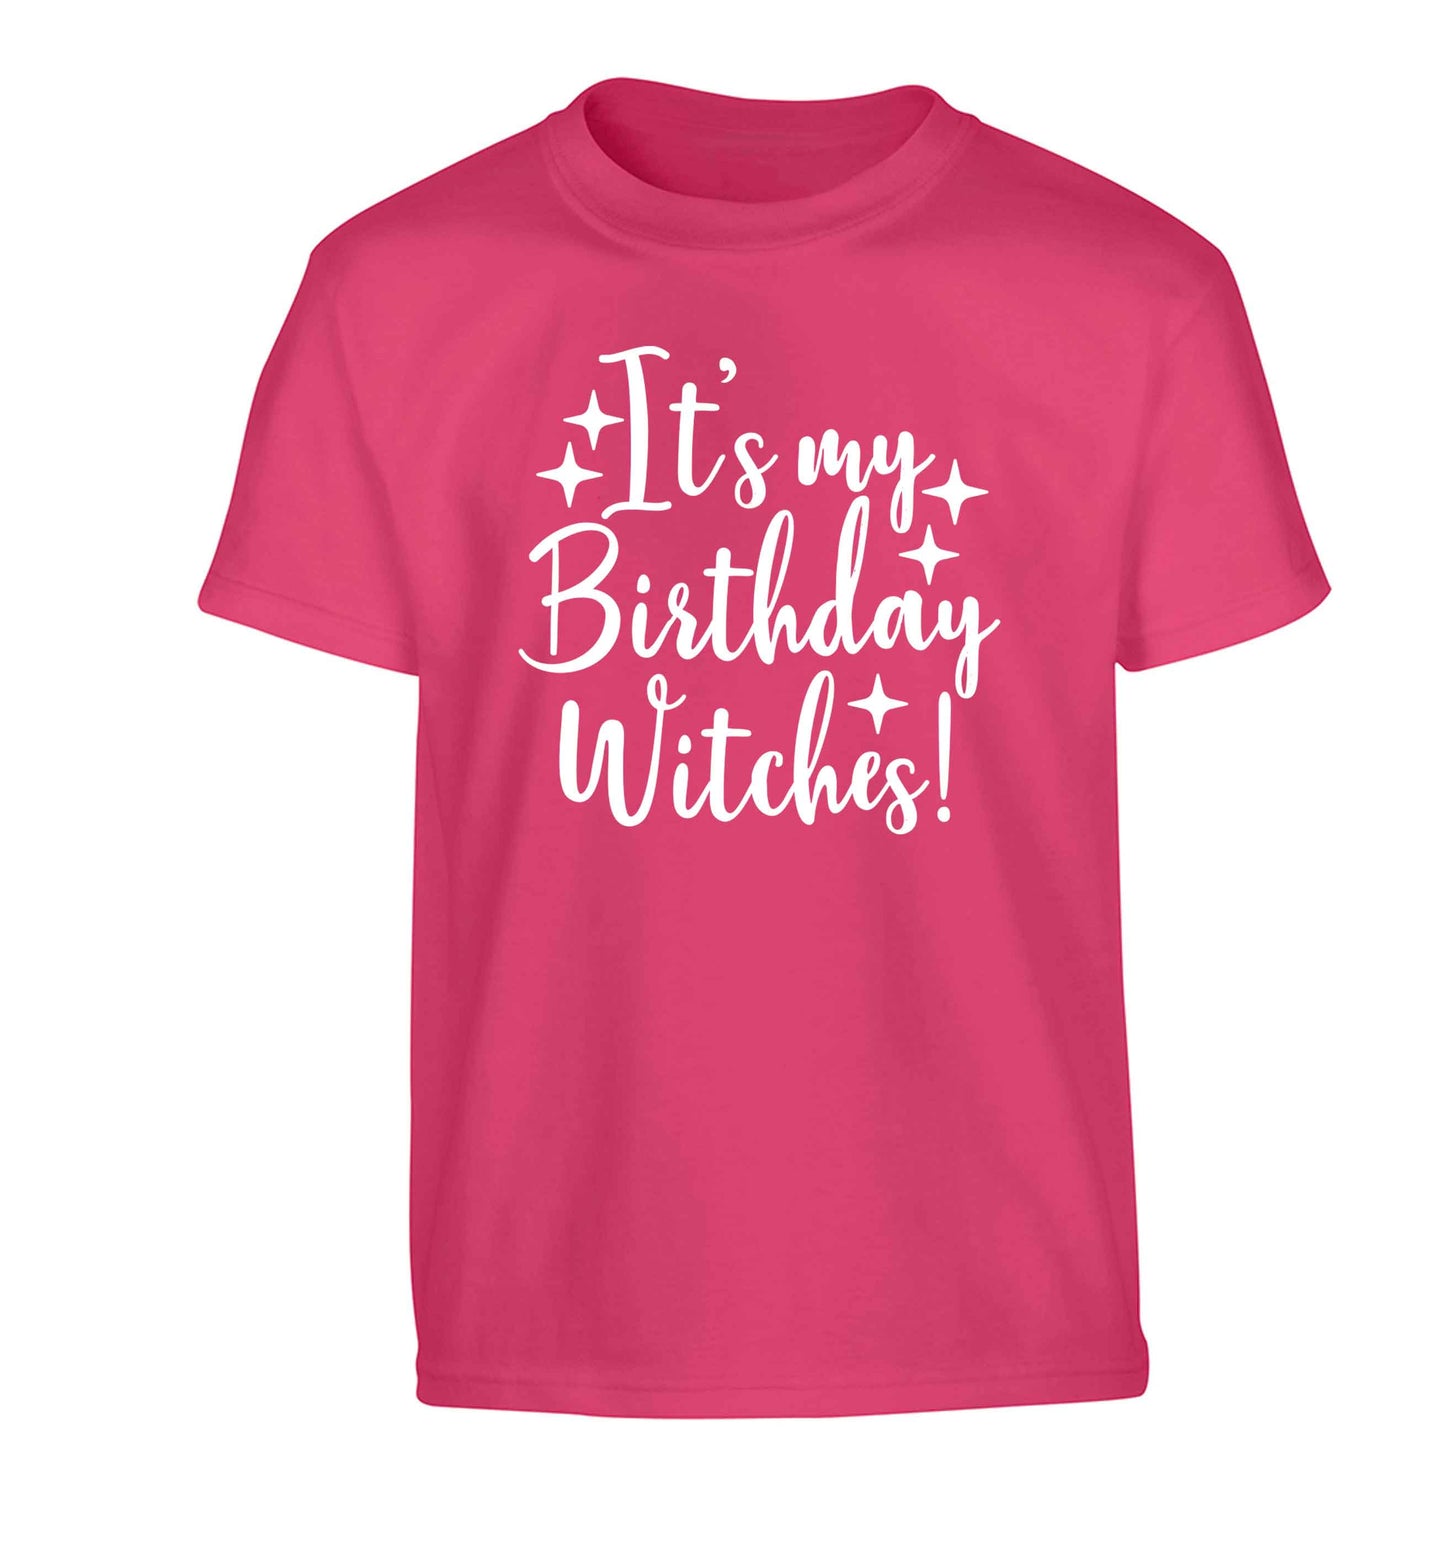 It's my birthday witches!Children's pink Tshirt 12-13 Years